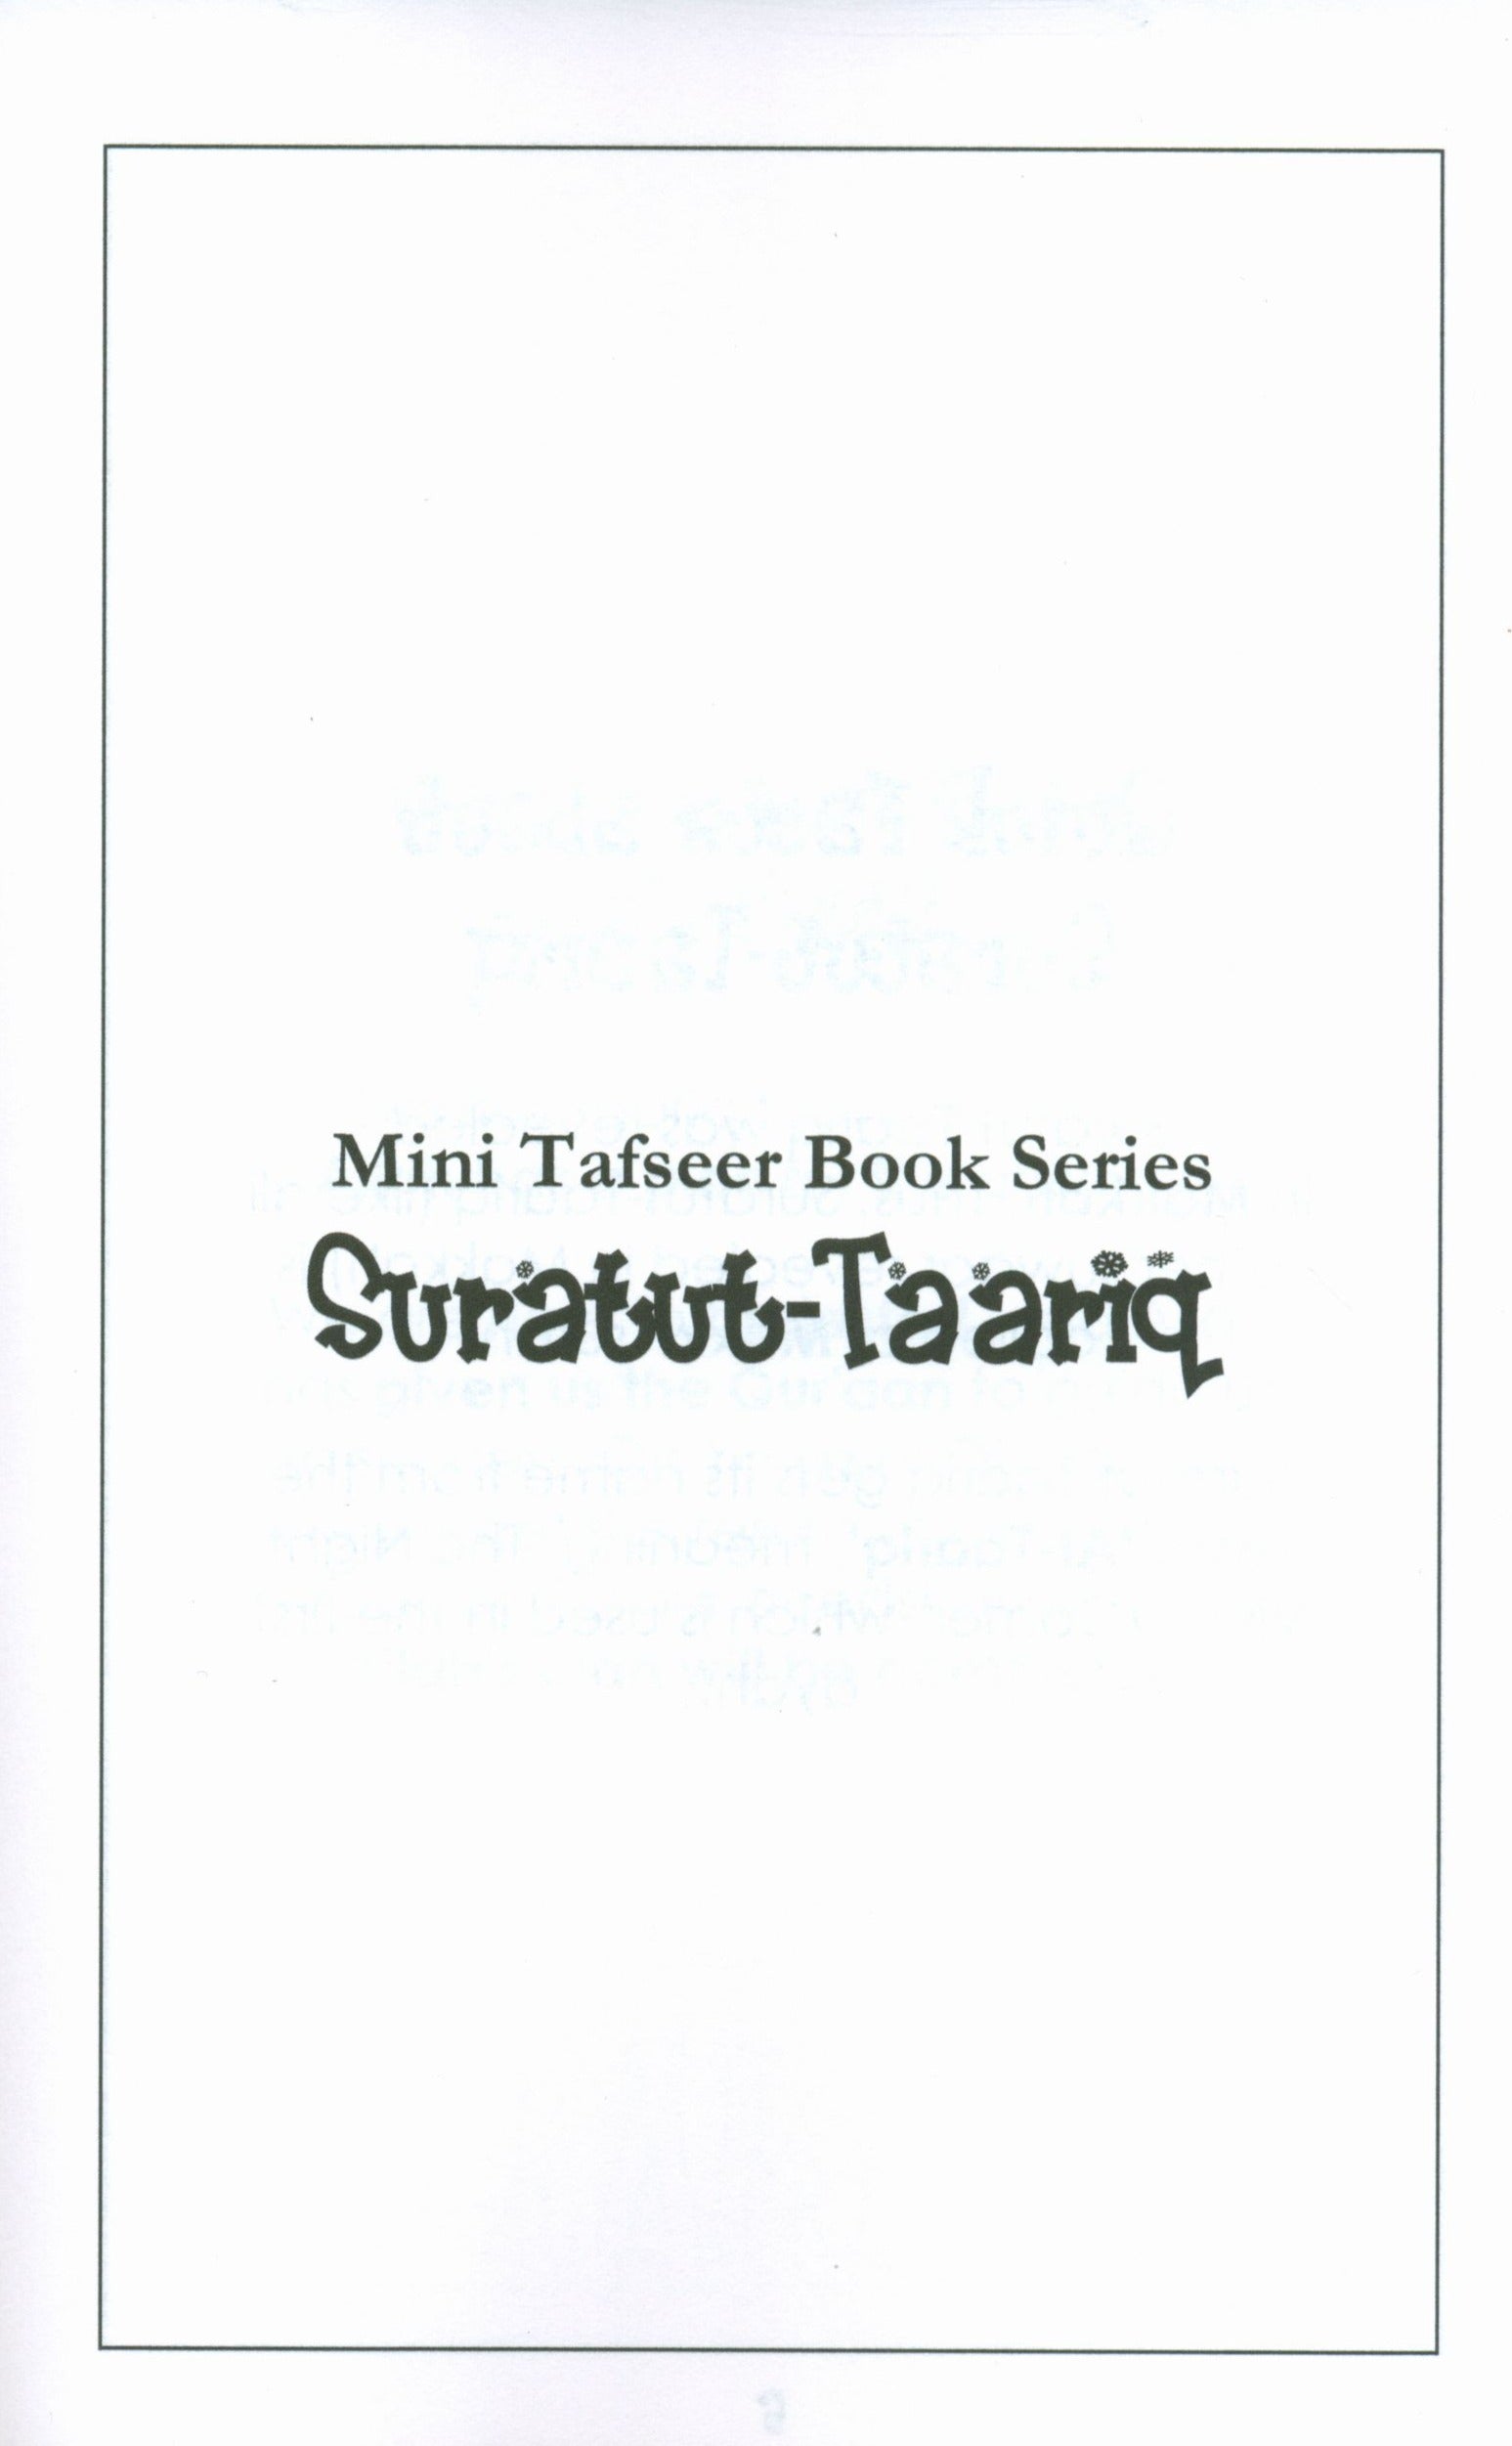 Mini Tafseer Book Suratul Taariq (Surah 86)